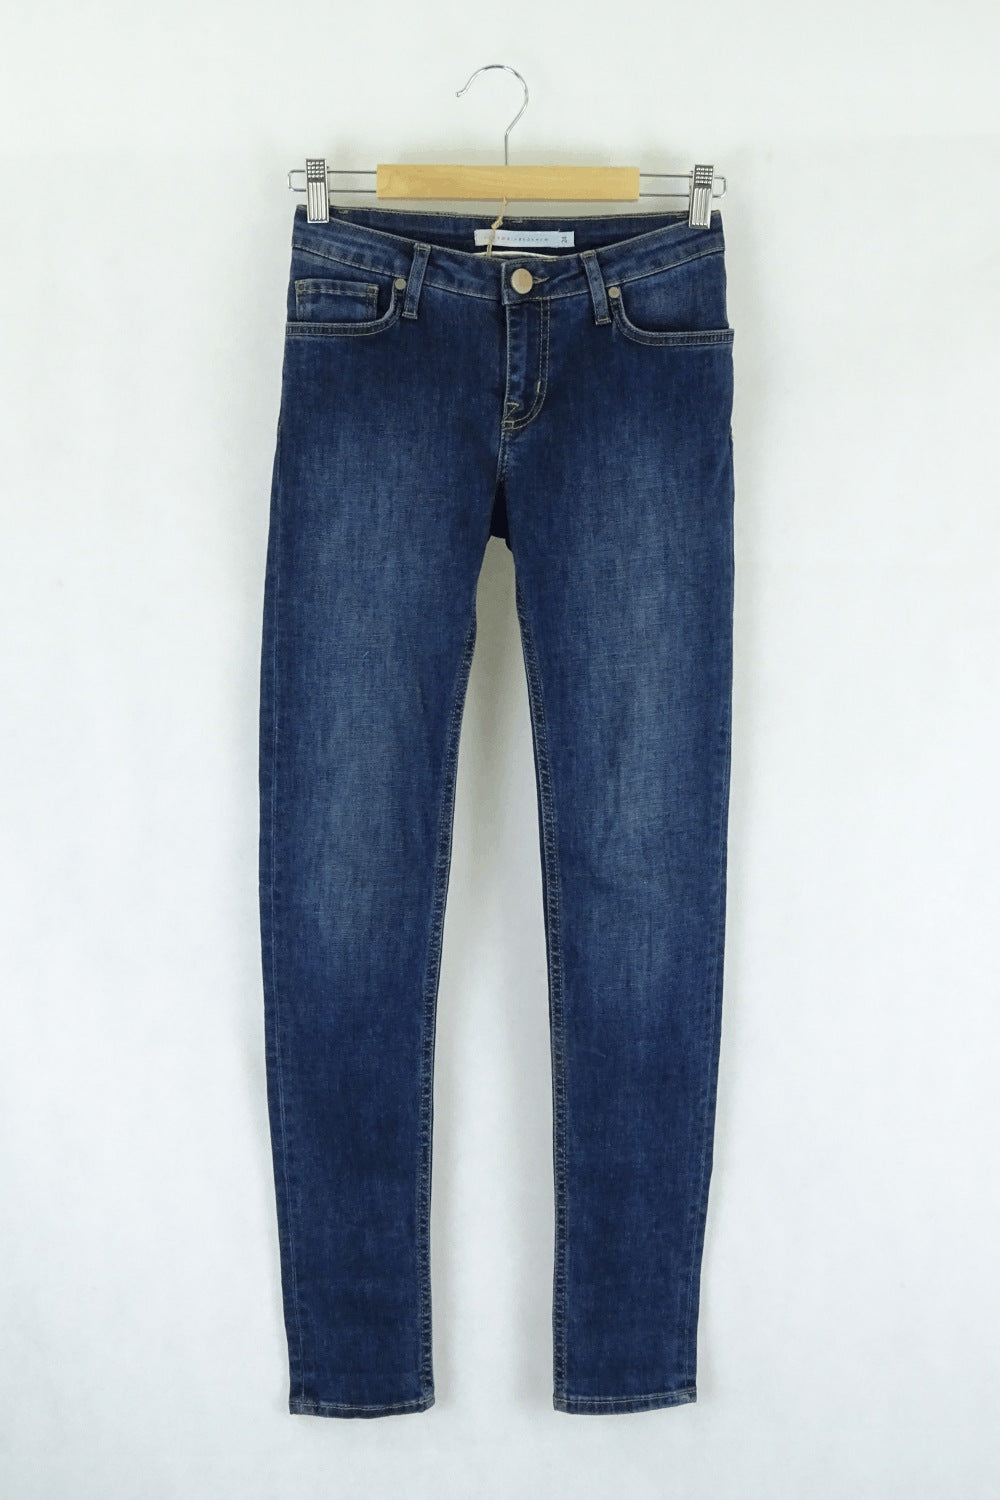 Victoria Beckham Blue Skinny Jeans 6